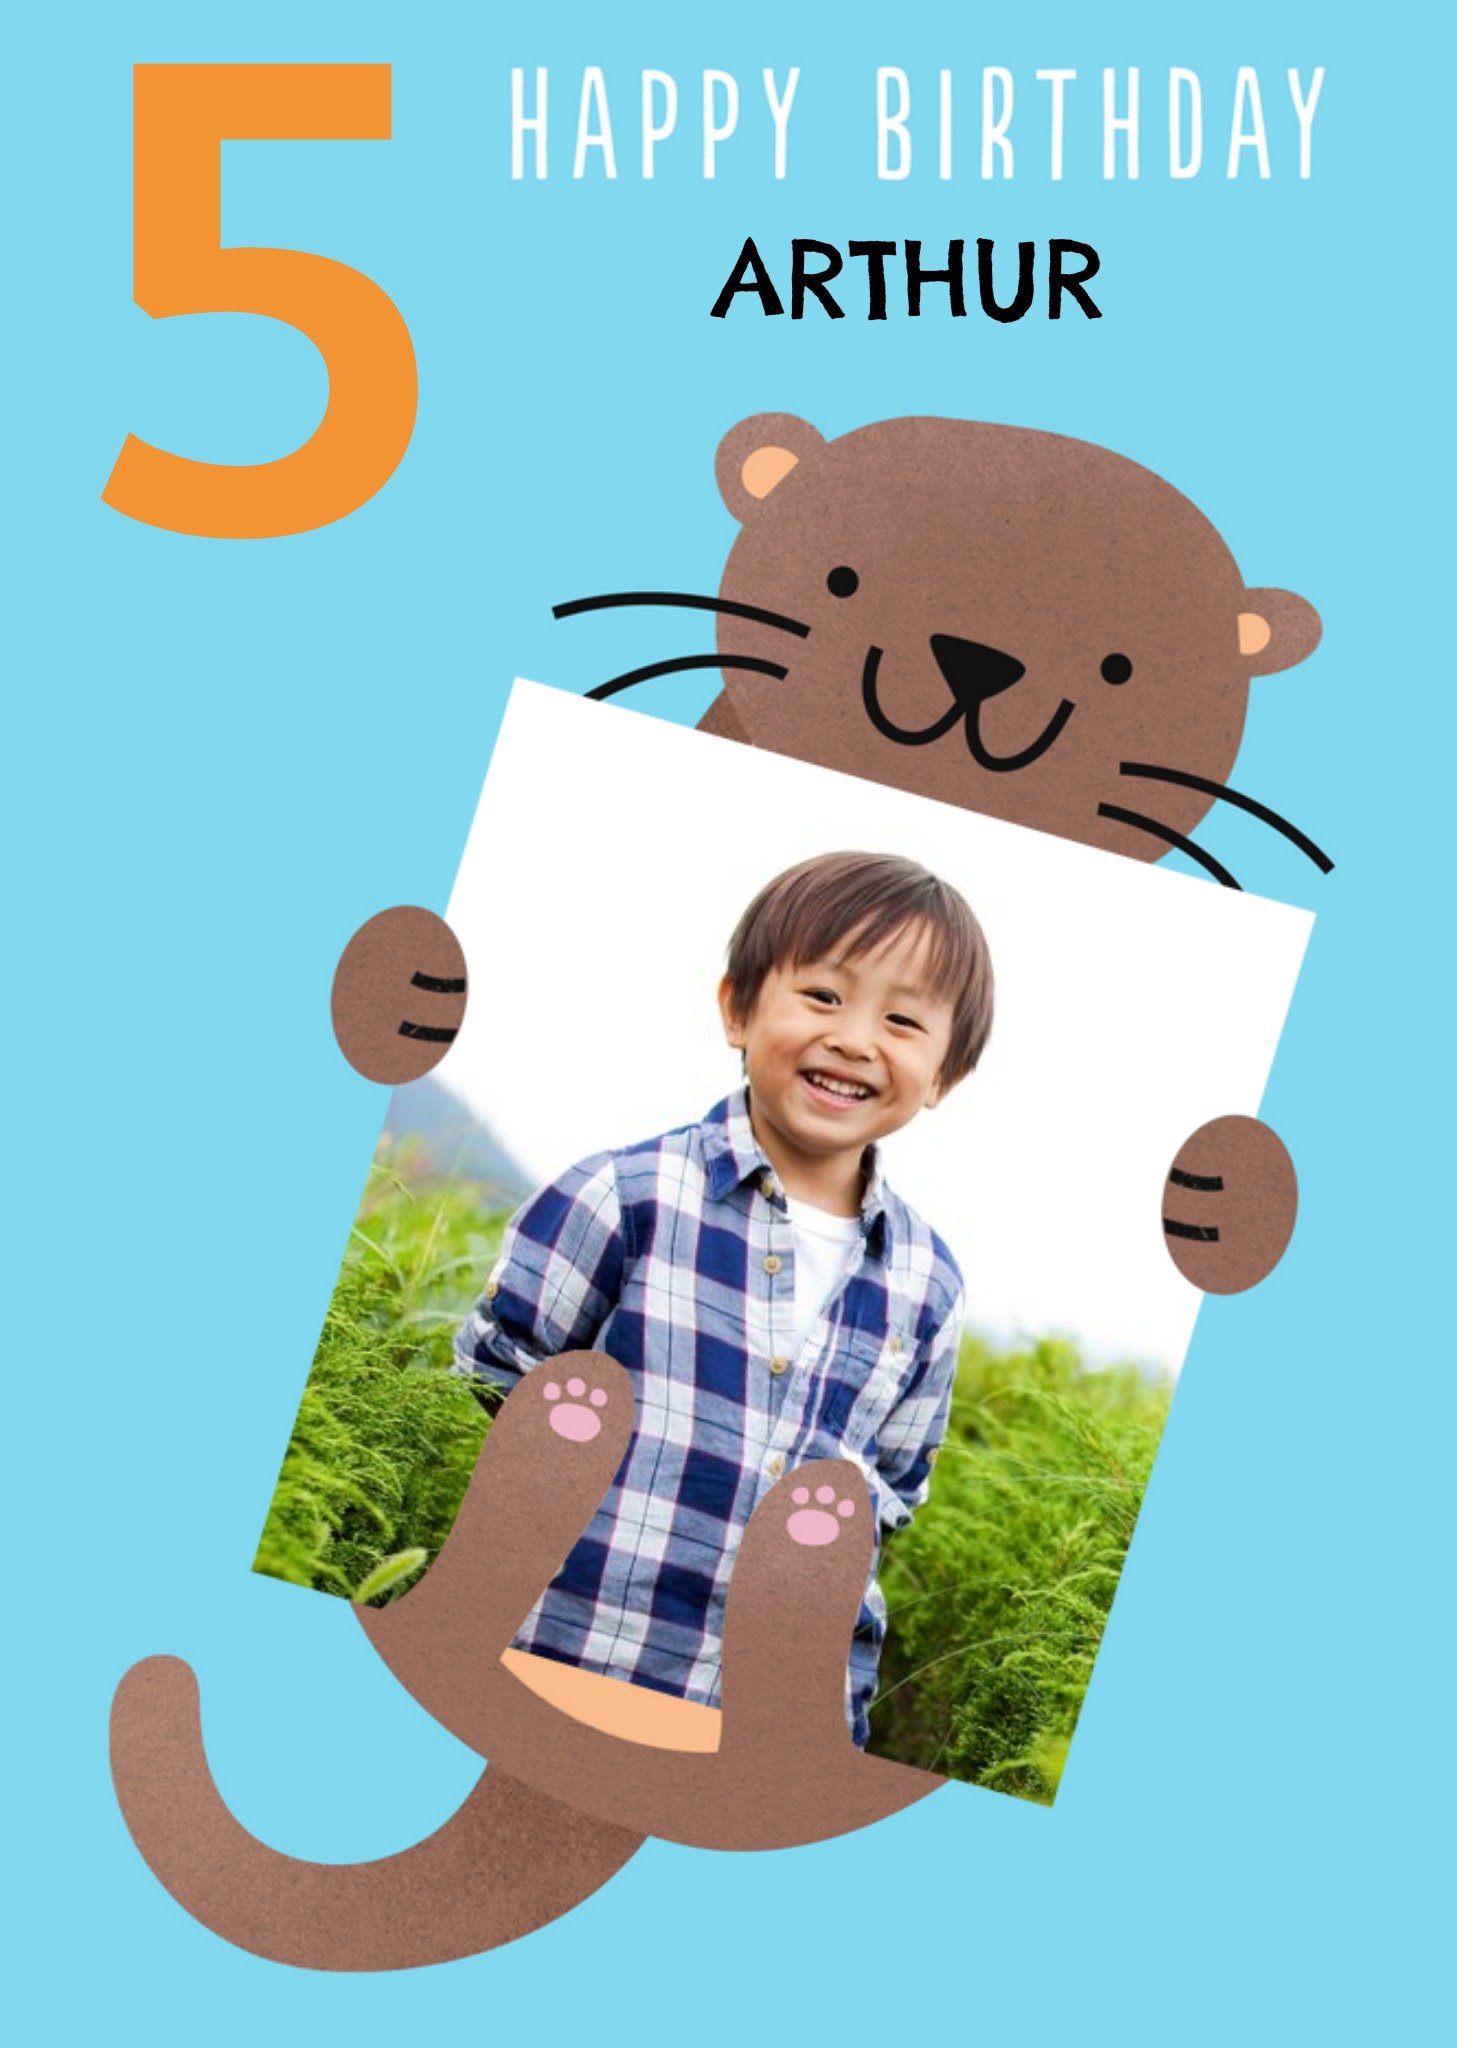 Moonpig Cute Simple Illustration Of An Otter Happy 5th Birthday Photo Upload Card Ecard